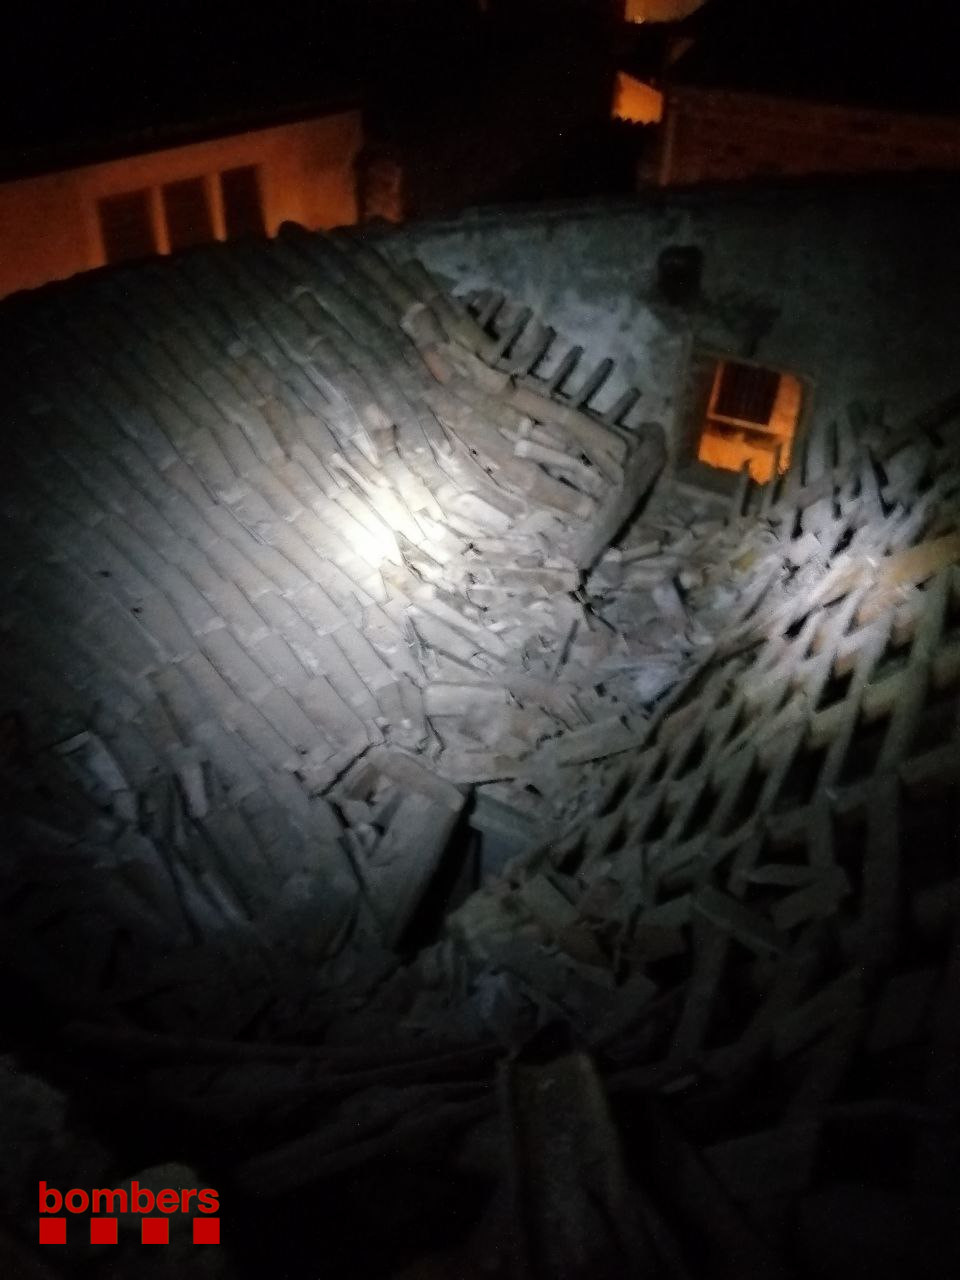 Espectacular derrumbe de una casa en Girona sin heridos